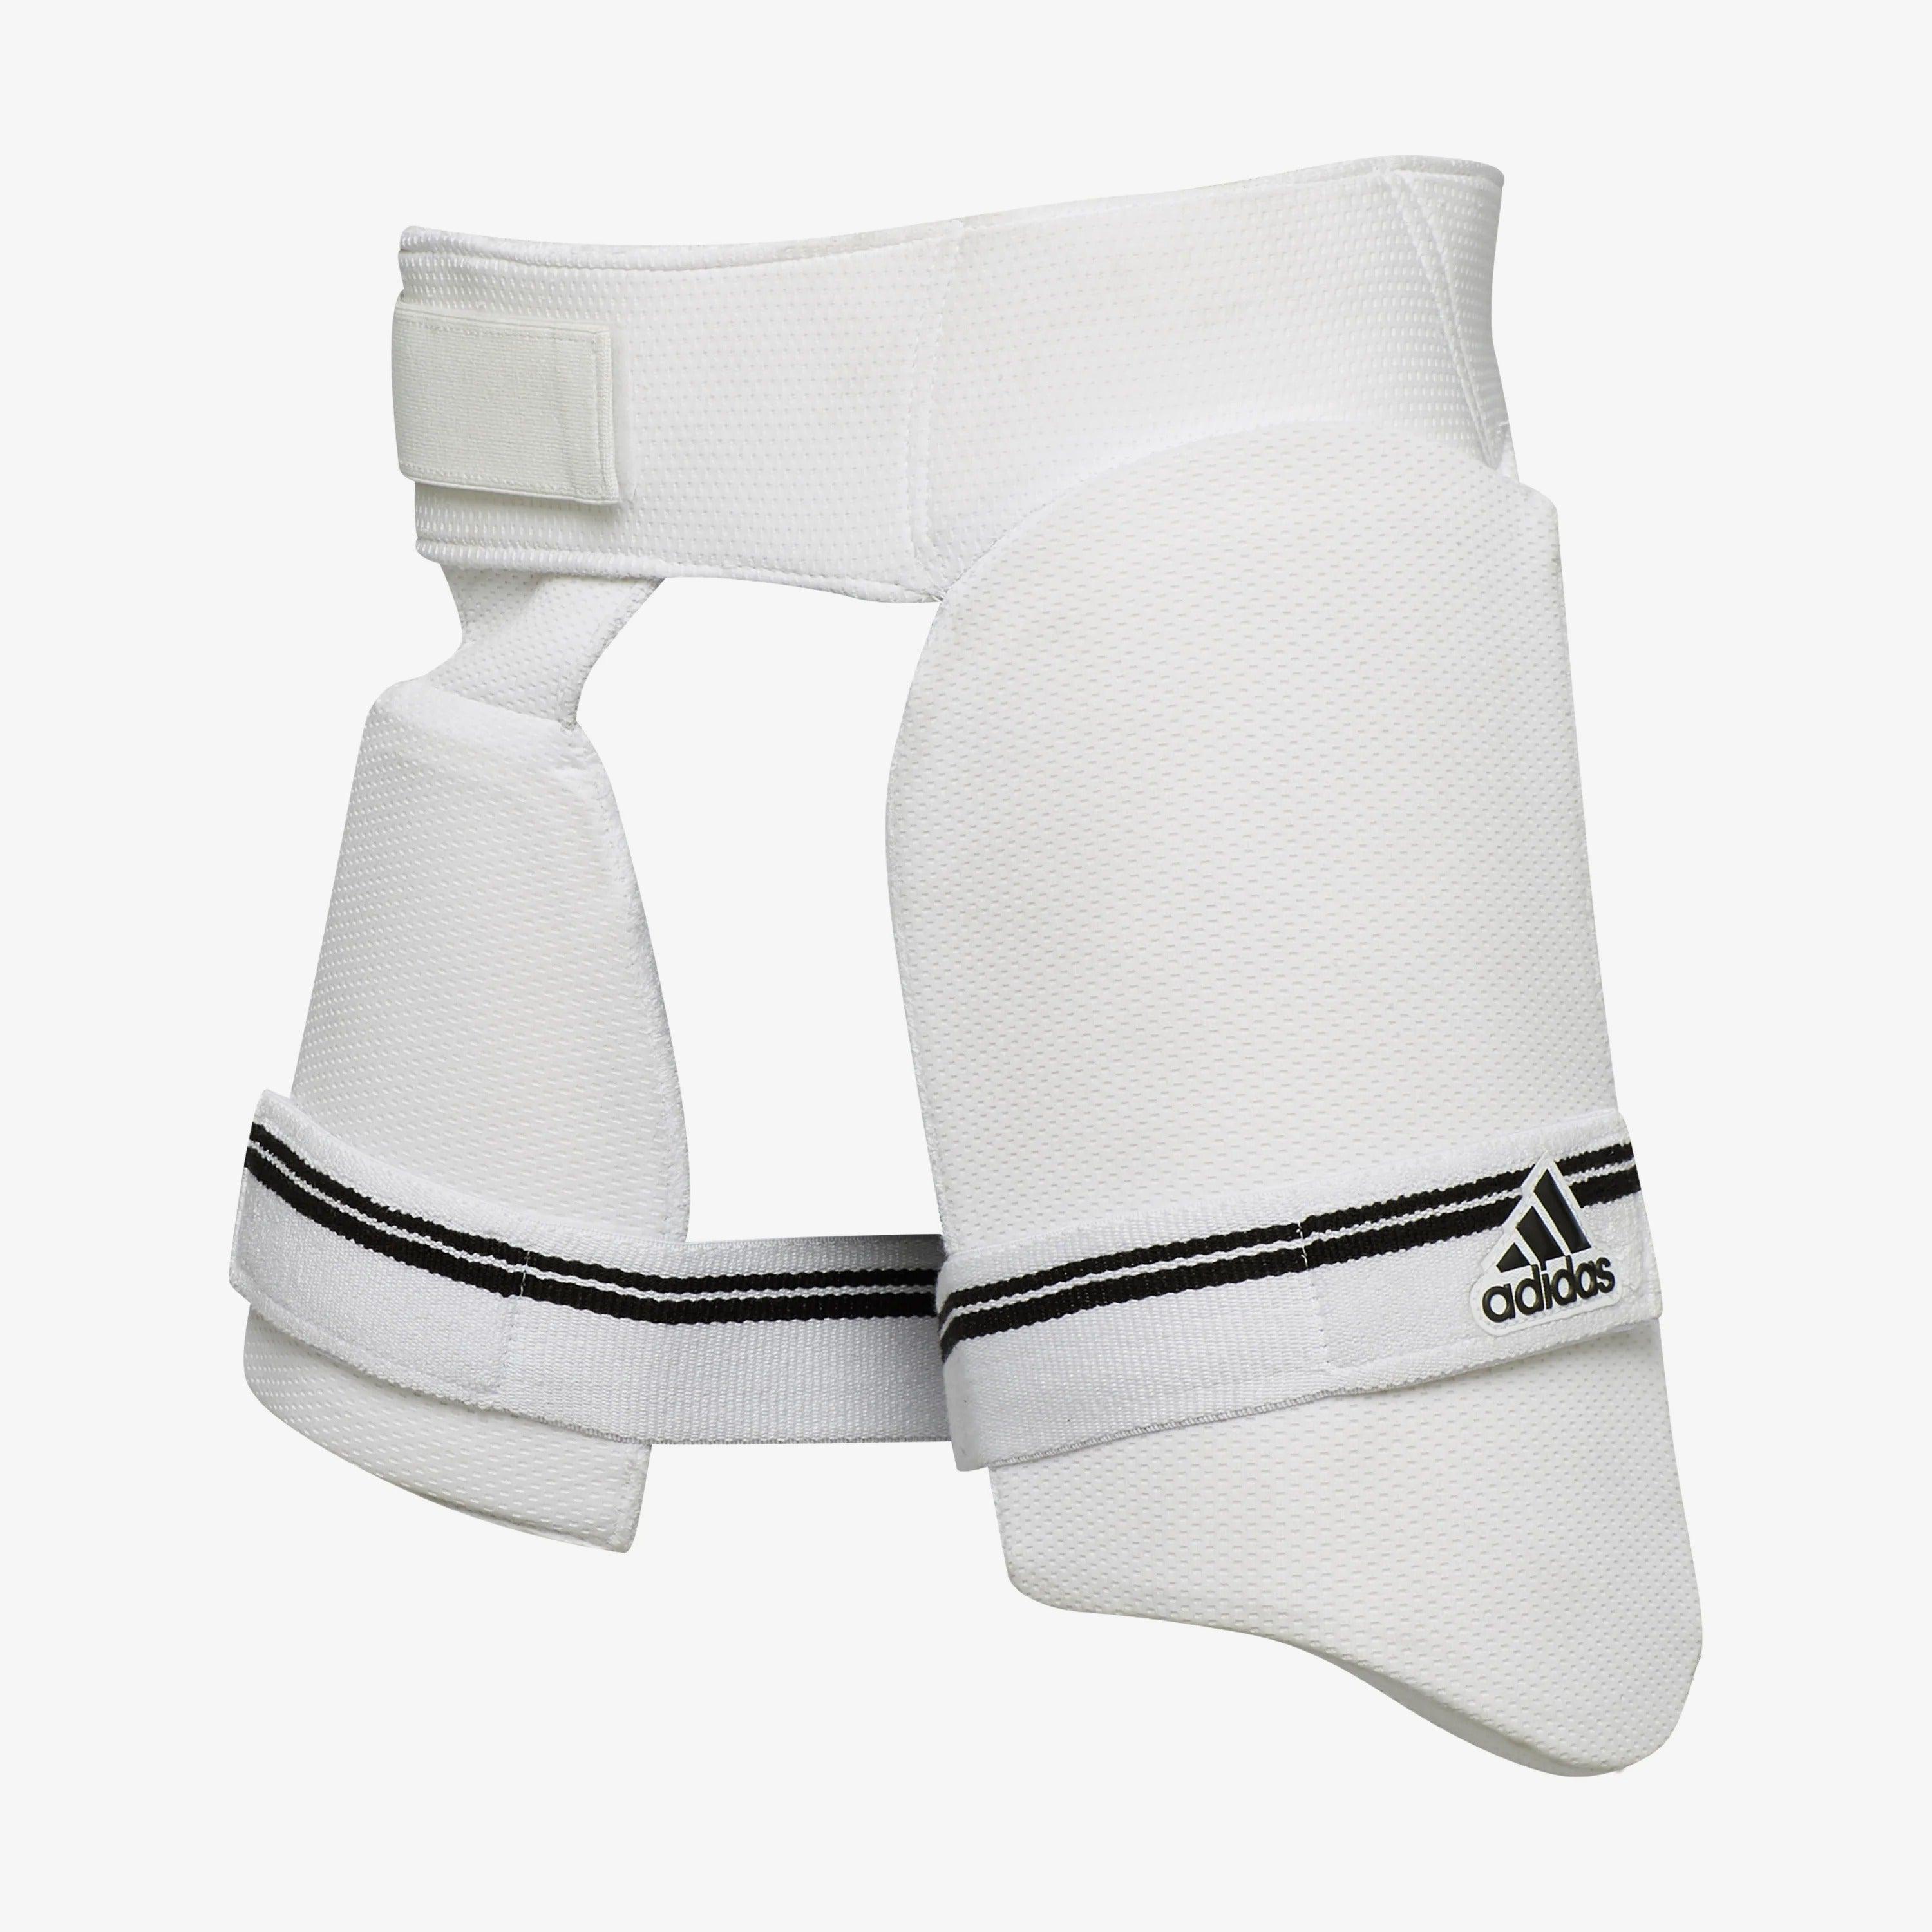 Adidas 1.0 Player Combo Thigh Pad - ADULT - AT Sports